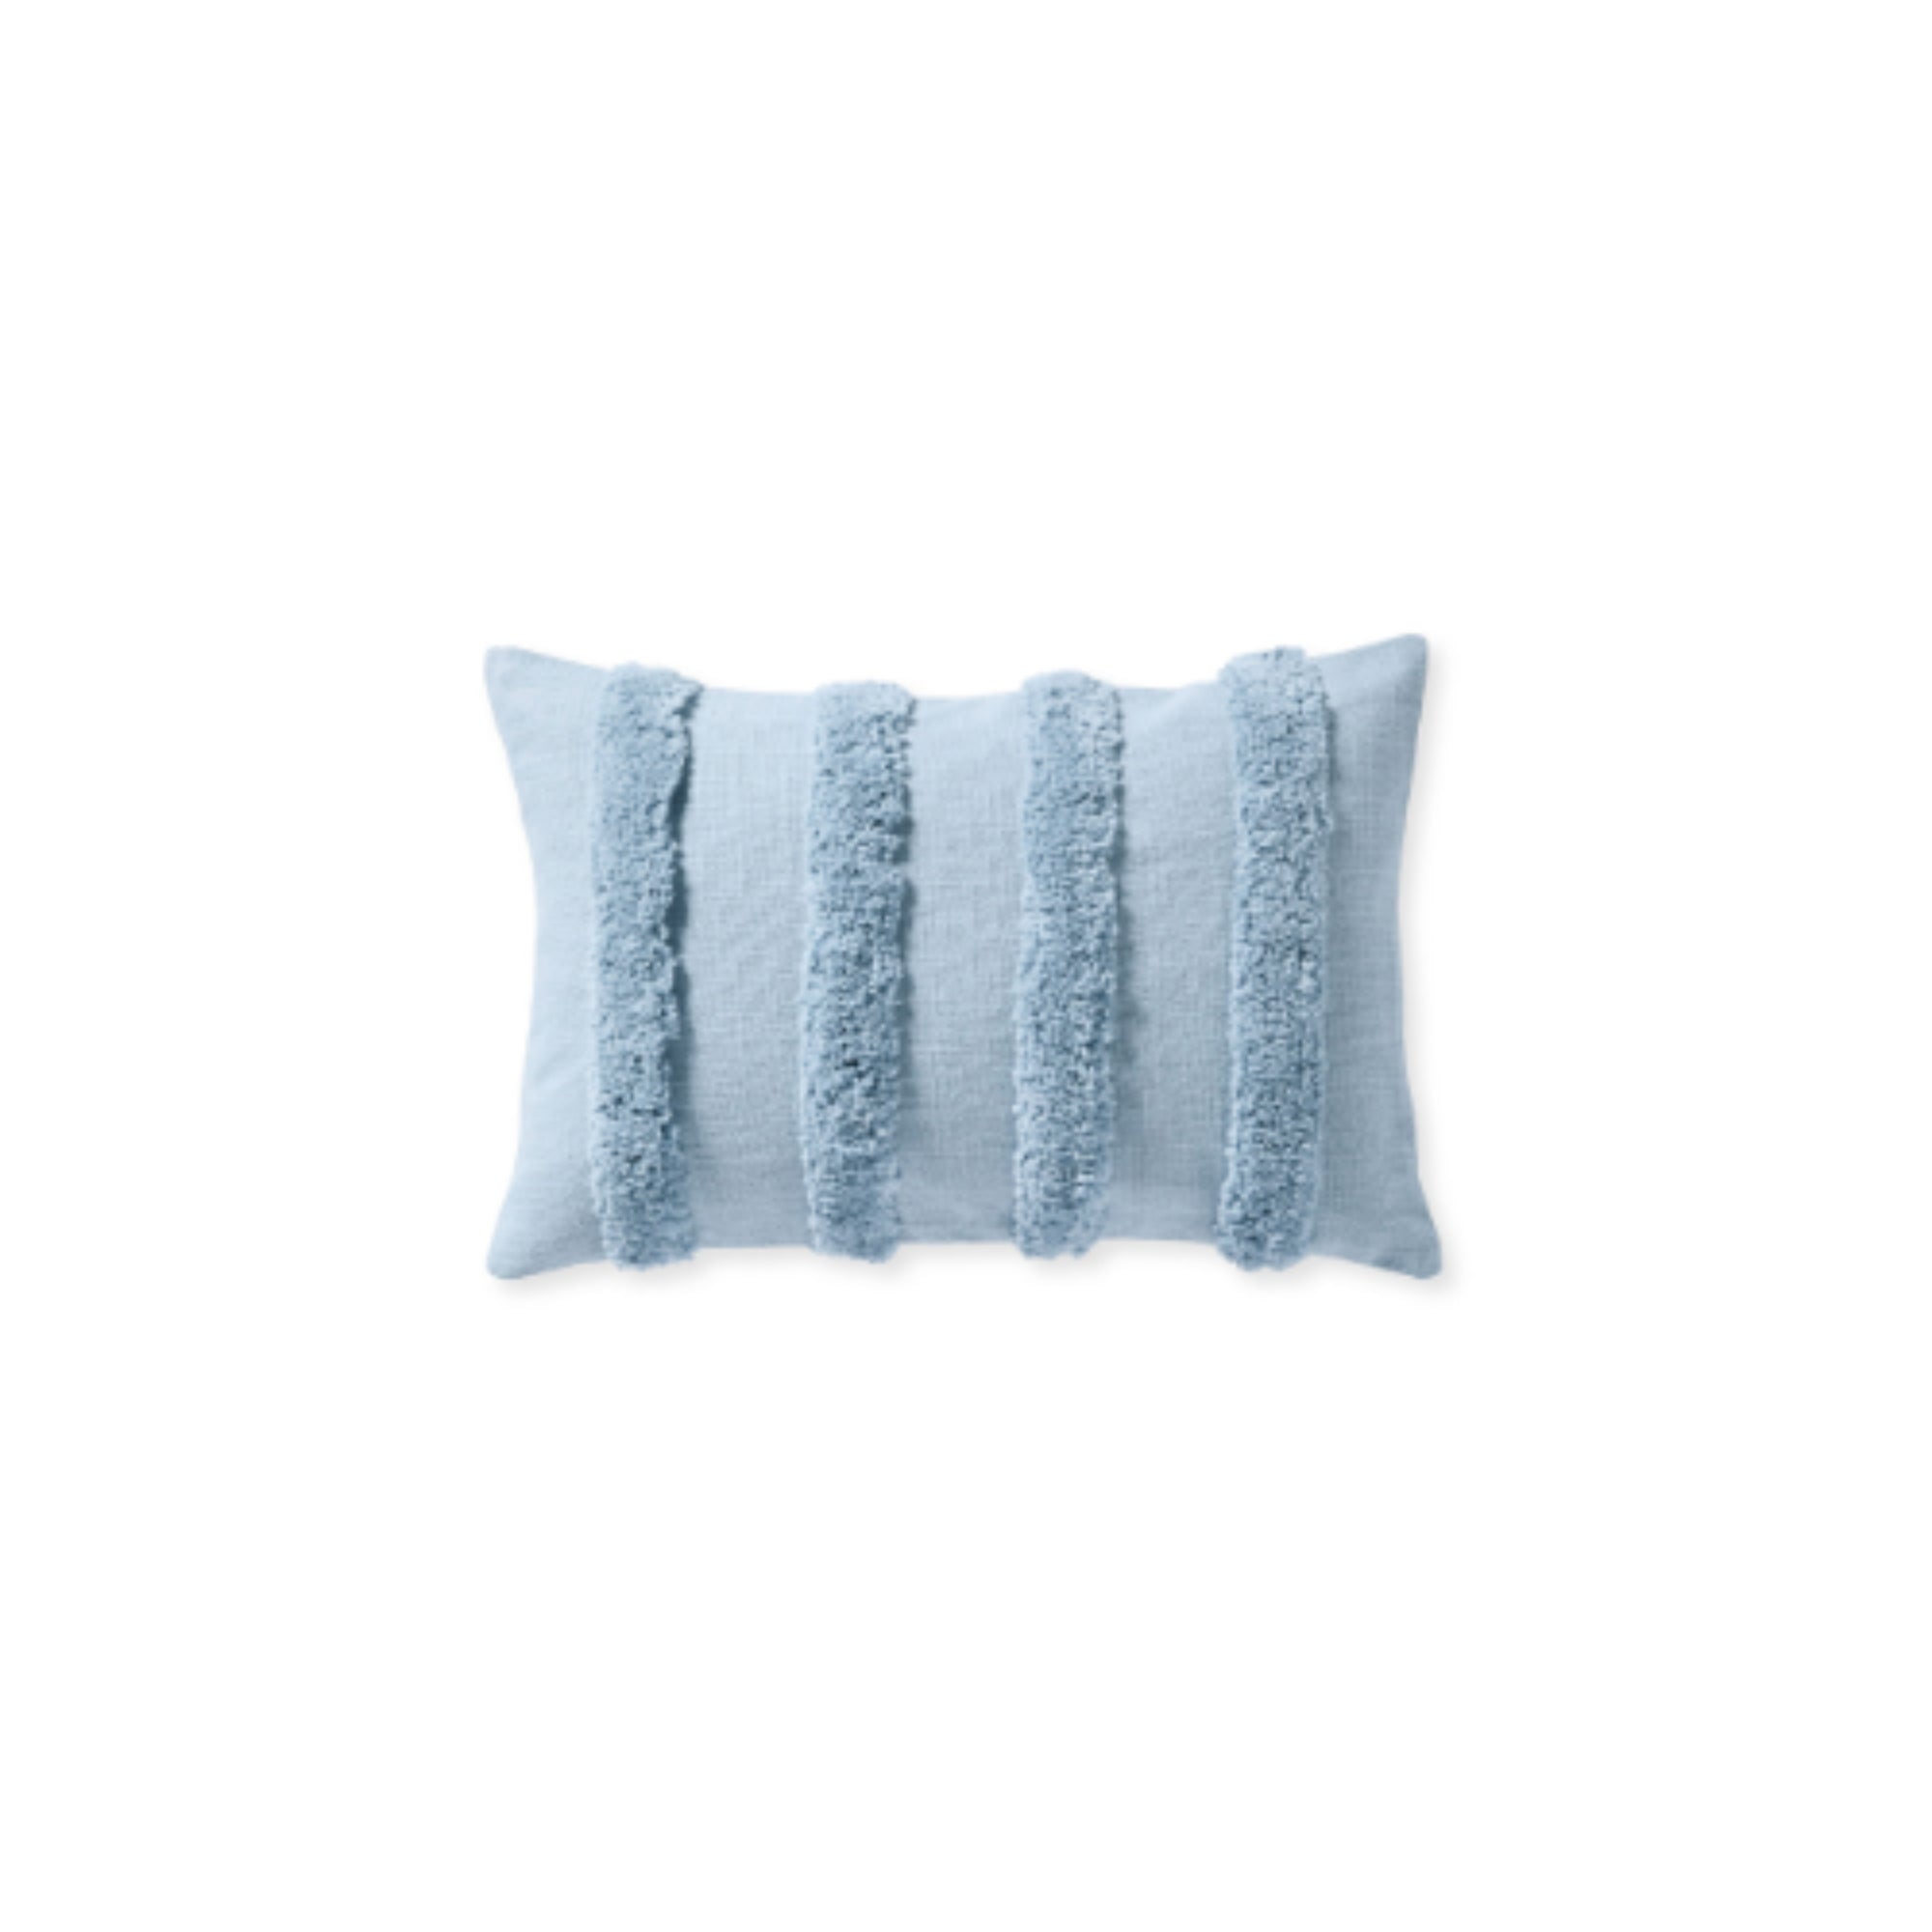 Coastal Hampton Style Indoor Outdoor Lumbar Pillow Cover, Fluffy Stripes, Baby Blue, 12"x20"